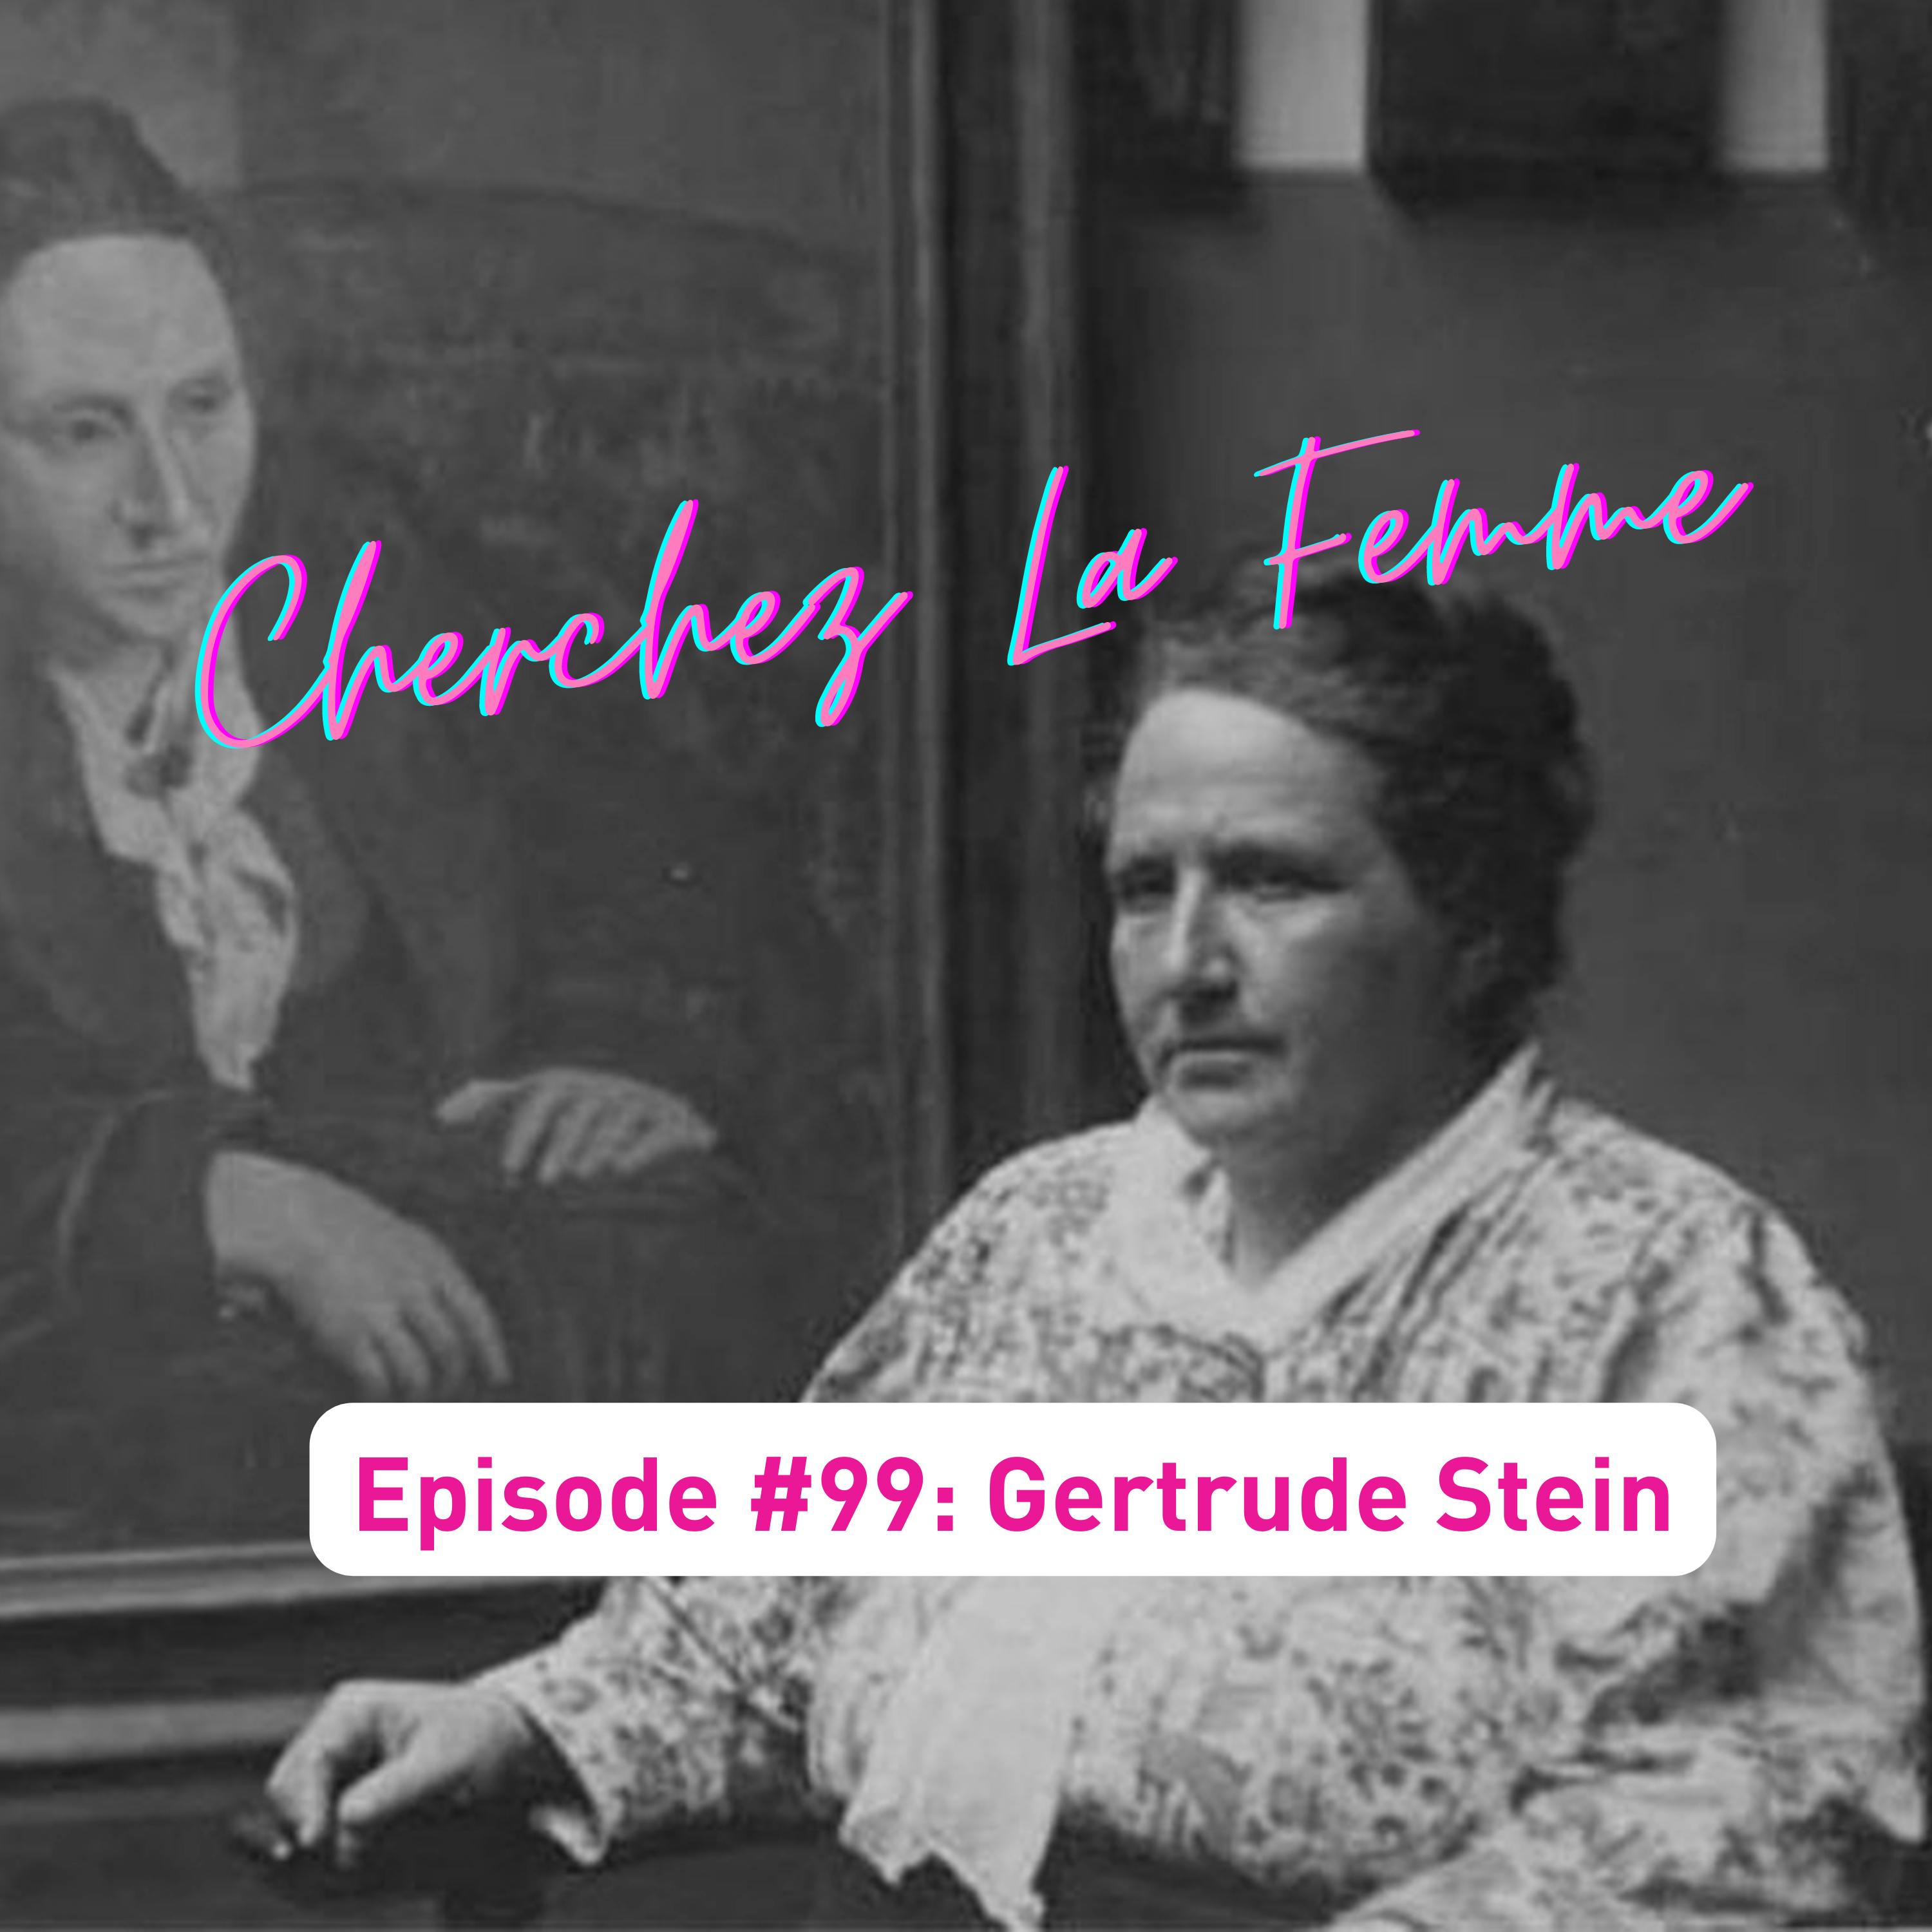 Episode #99: Cherchez La Femme, or The Woman Behind the Art--Gertrude Stein (Season 11, Episode 8)